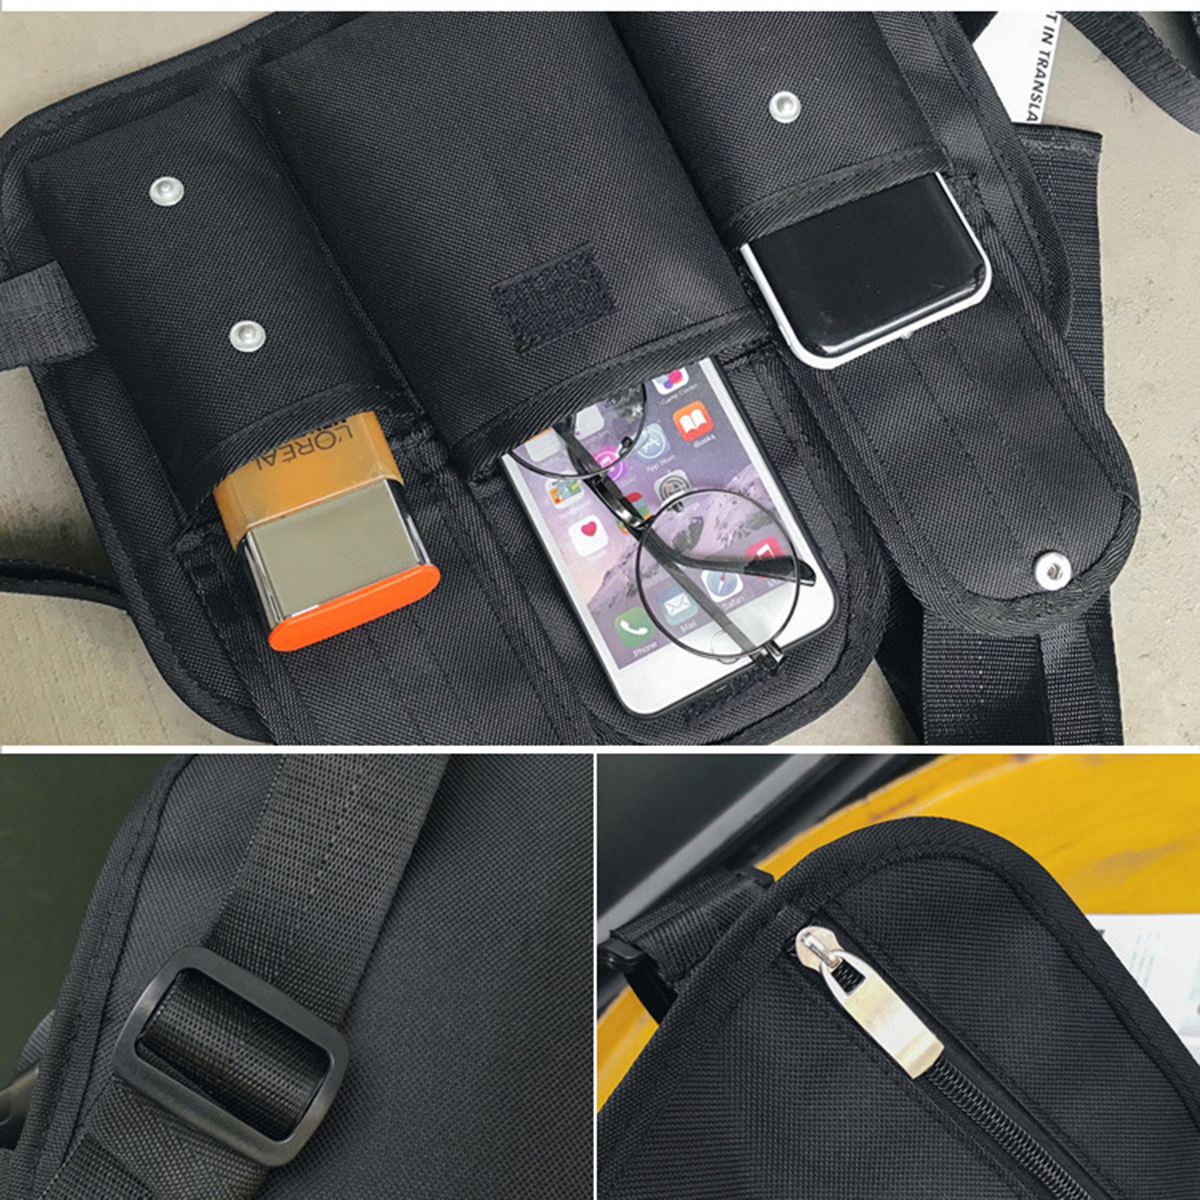 Nylon-Tactical-Chest-Bag-Crossbody-Bag-Camping-Hunting-Shoulder-Bag-1591105-5